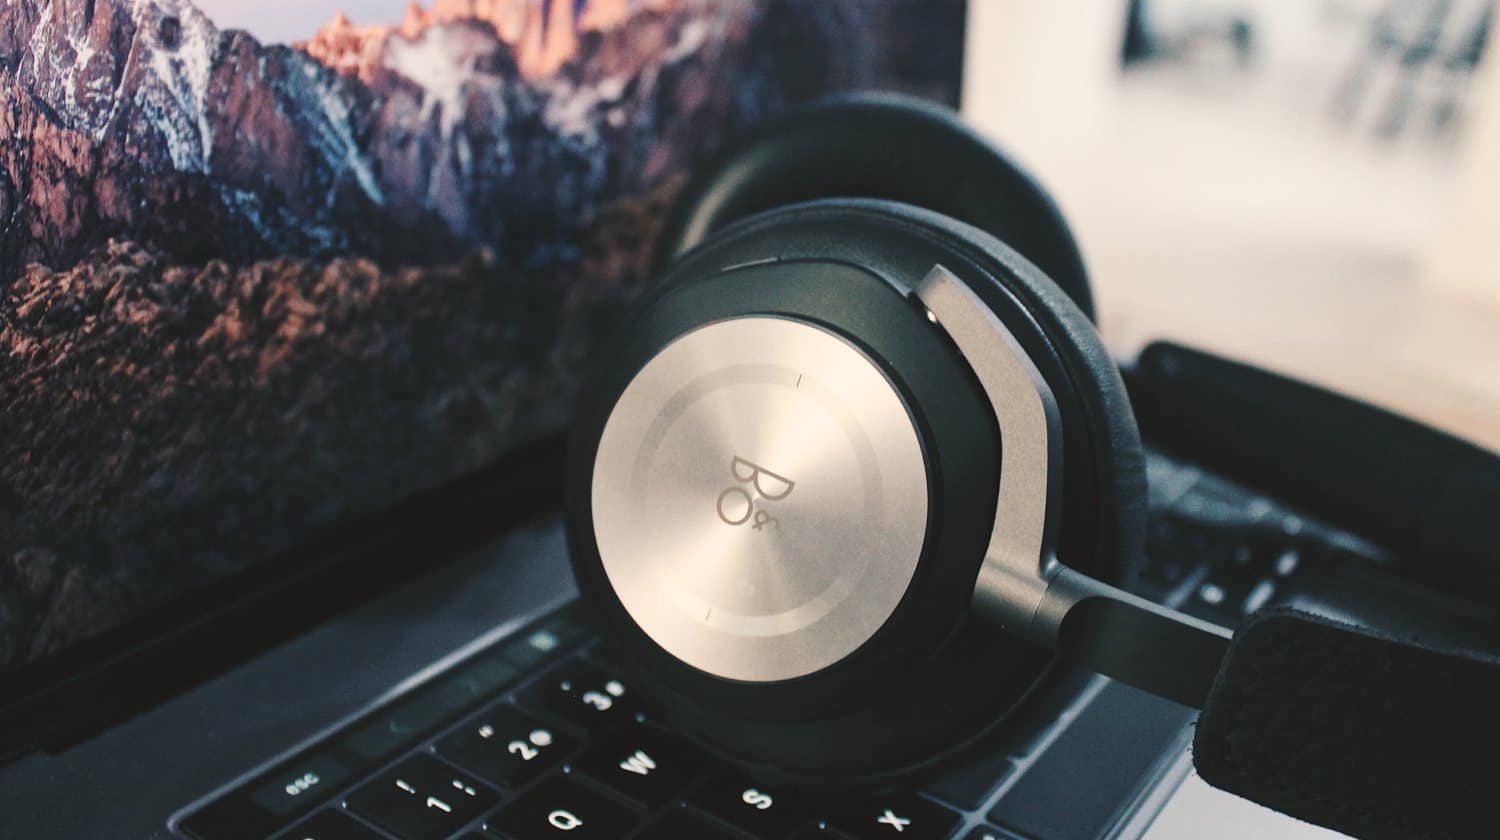 wireless headphones on top of laptop | Wireless Beats Headphones Alternatives | Noobie | wireless beats headphones | beats by dr. dre | featured